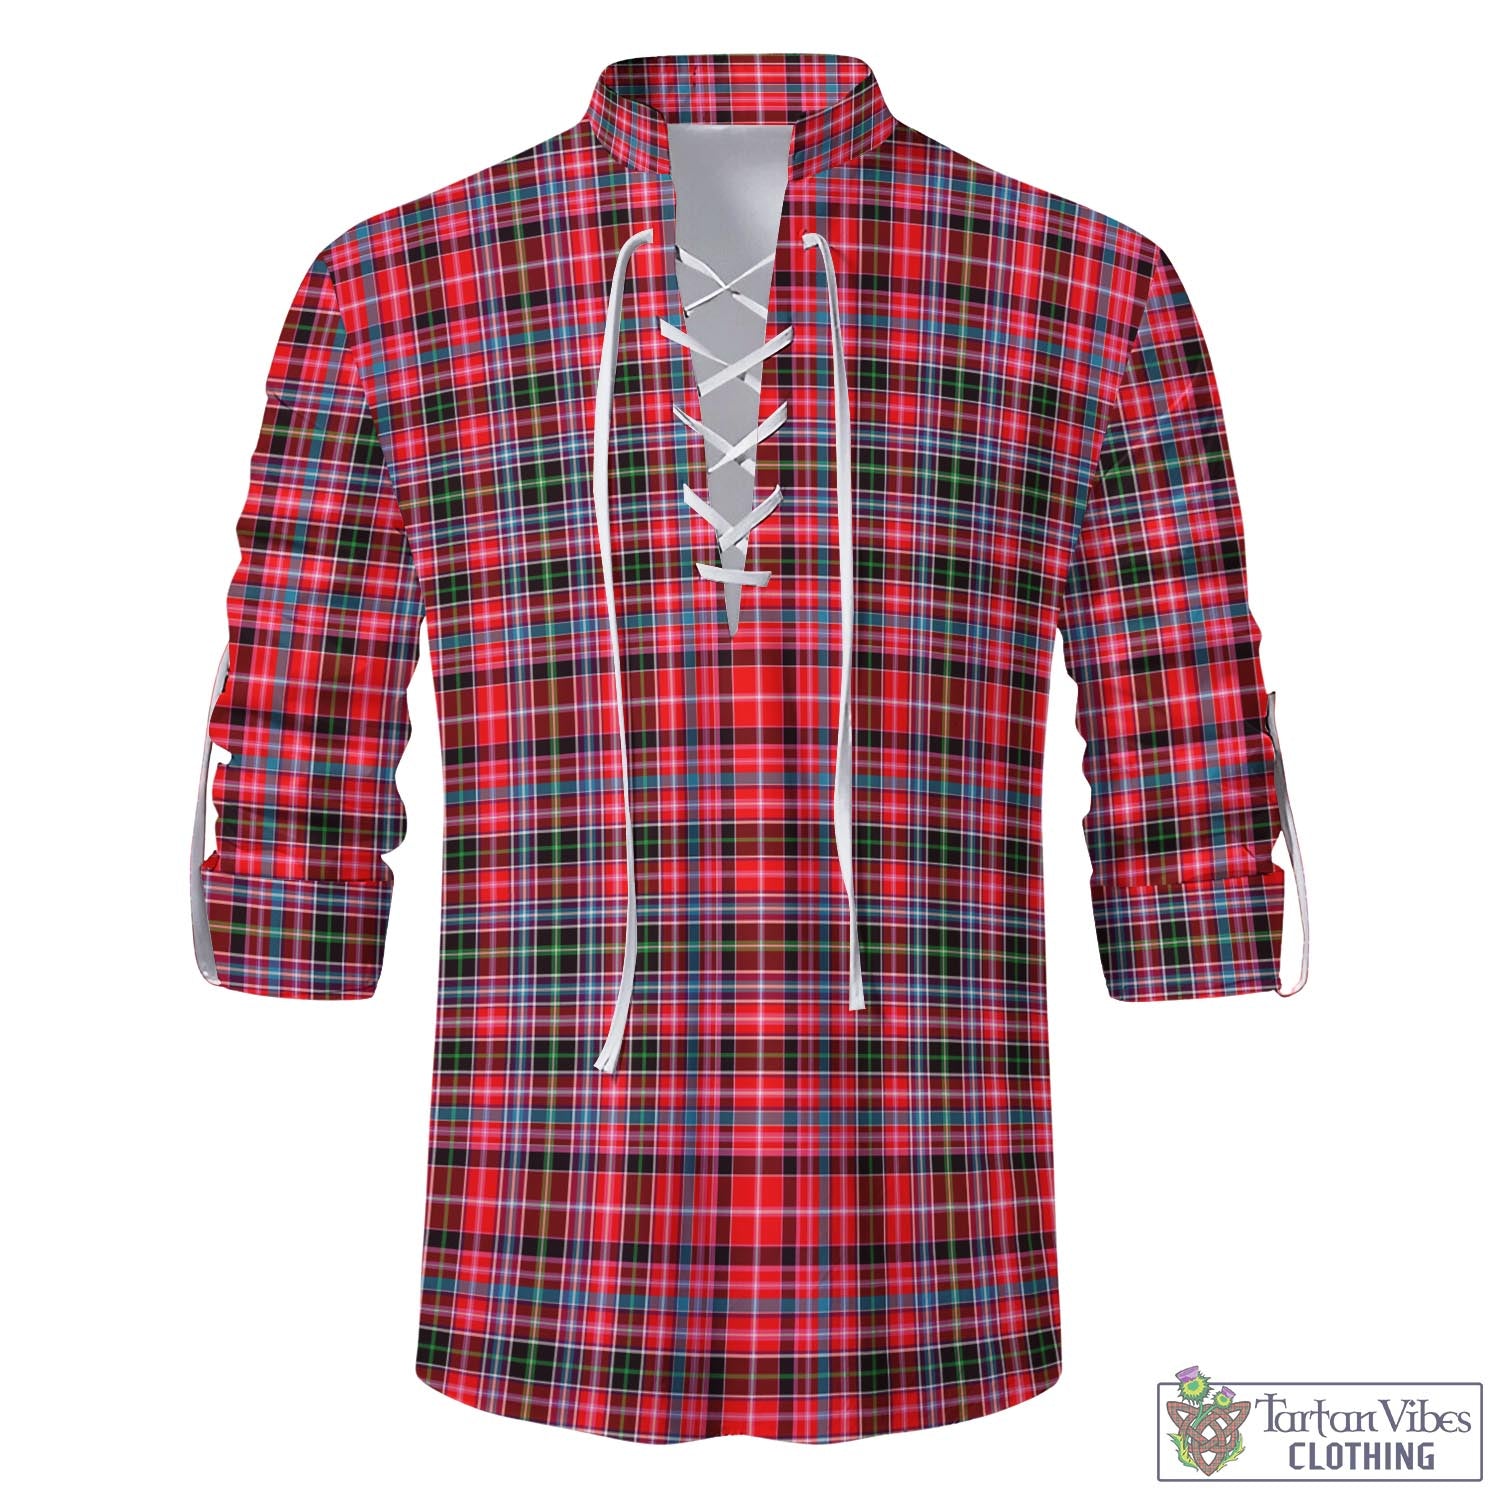 Tartan Vibes Clothing Aberdeen District Tartan Men's Scottish Traditional Jacobite Ghillie Kilt Shirt